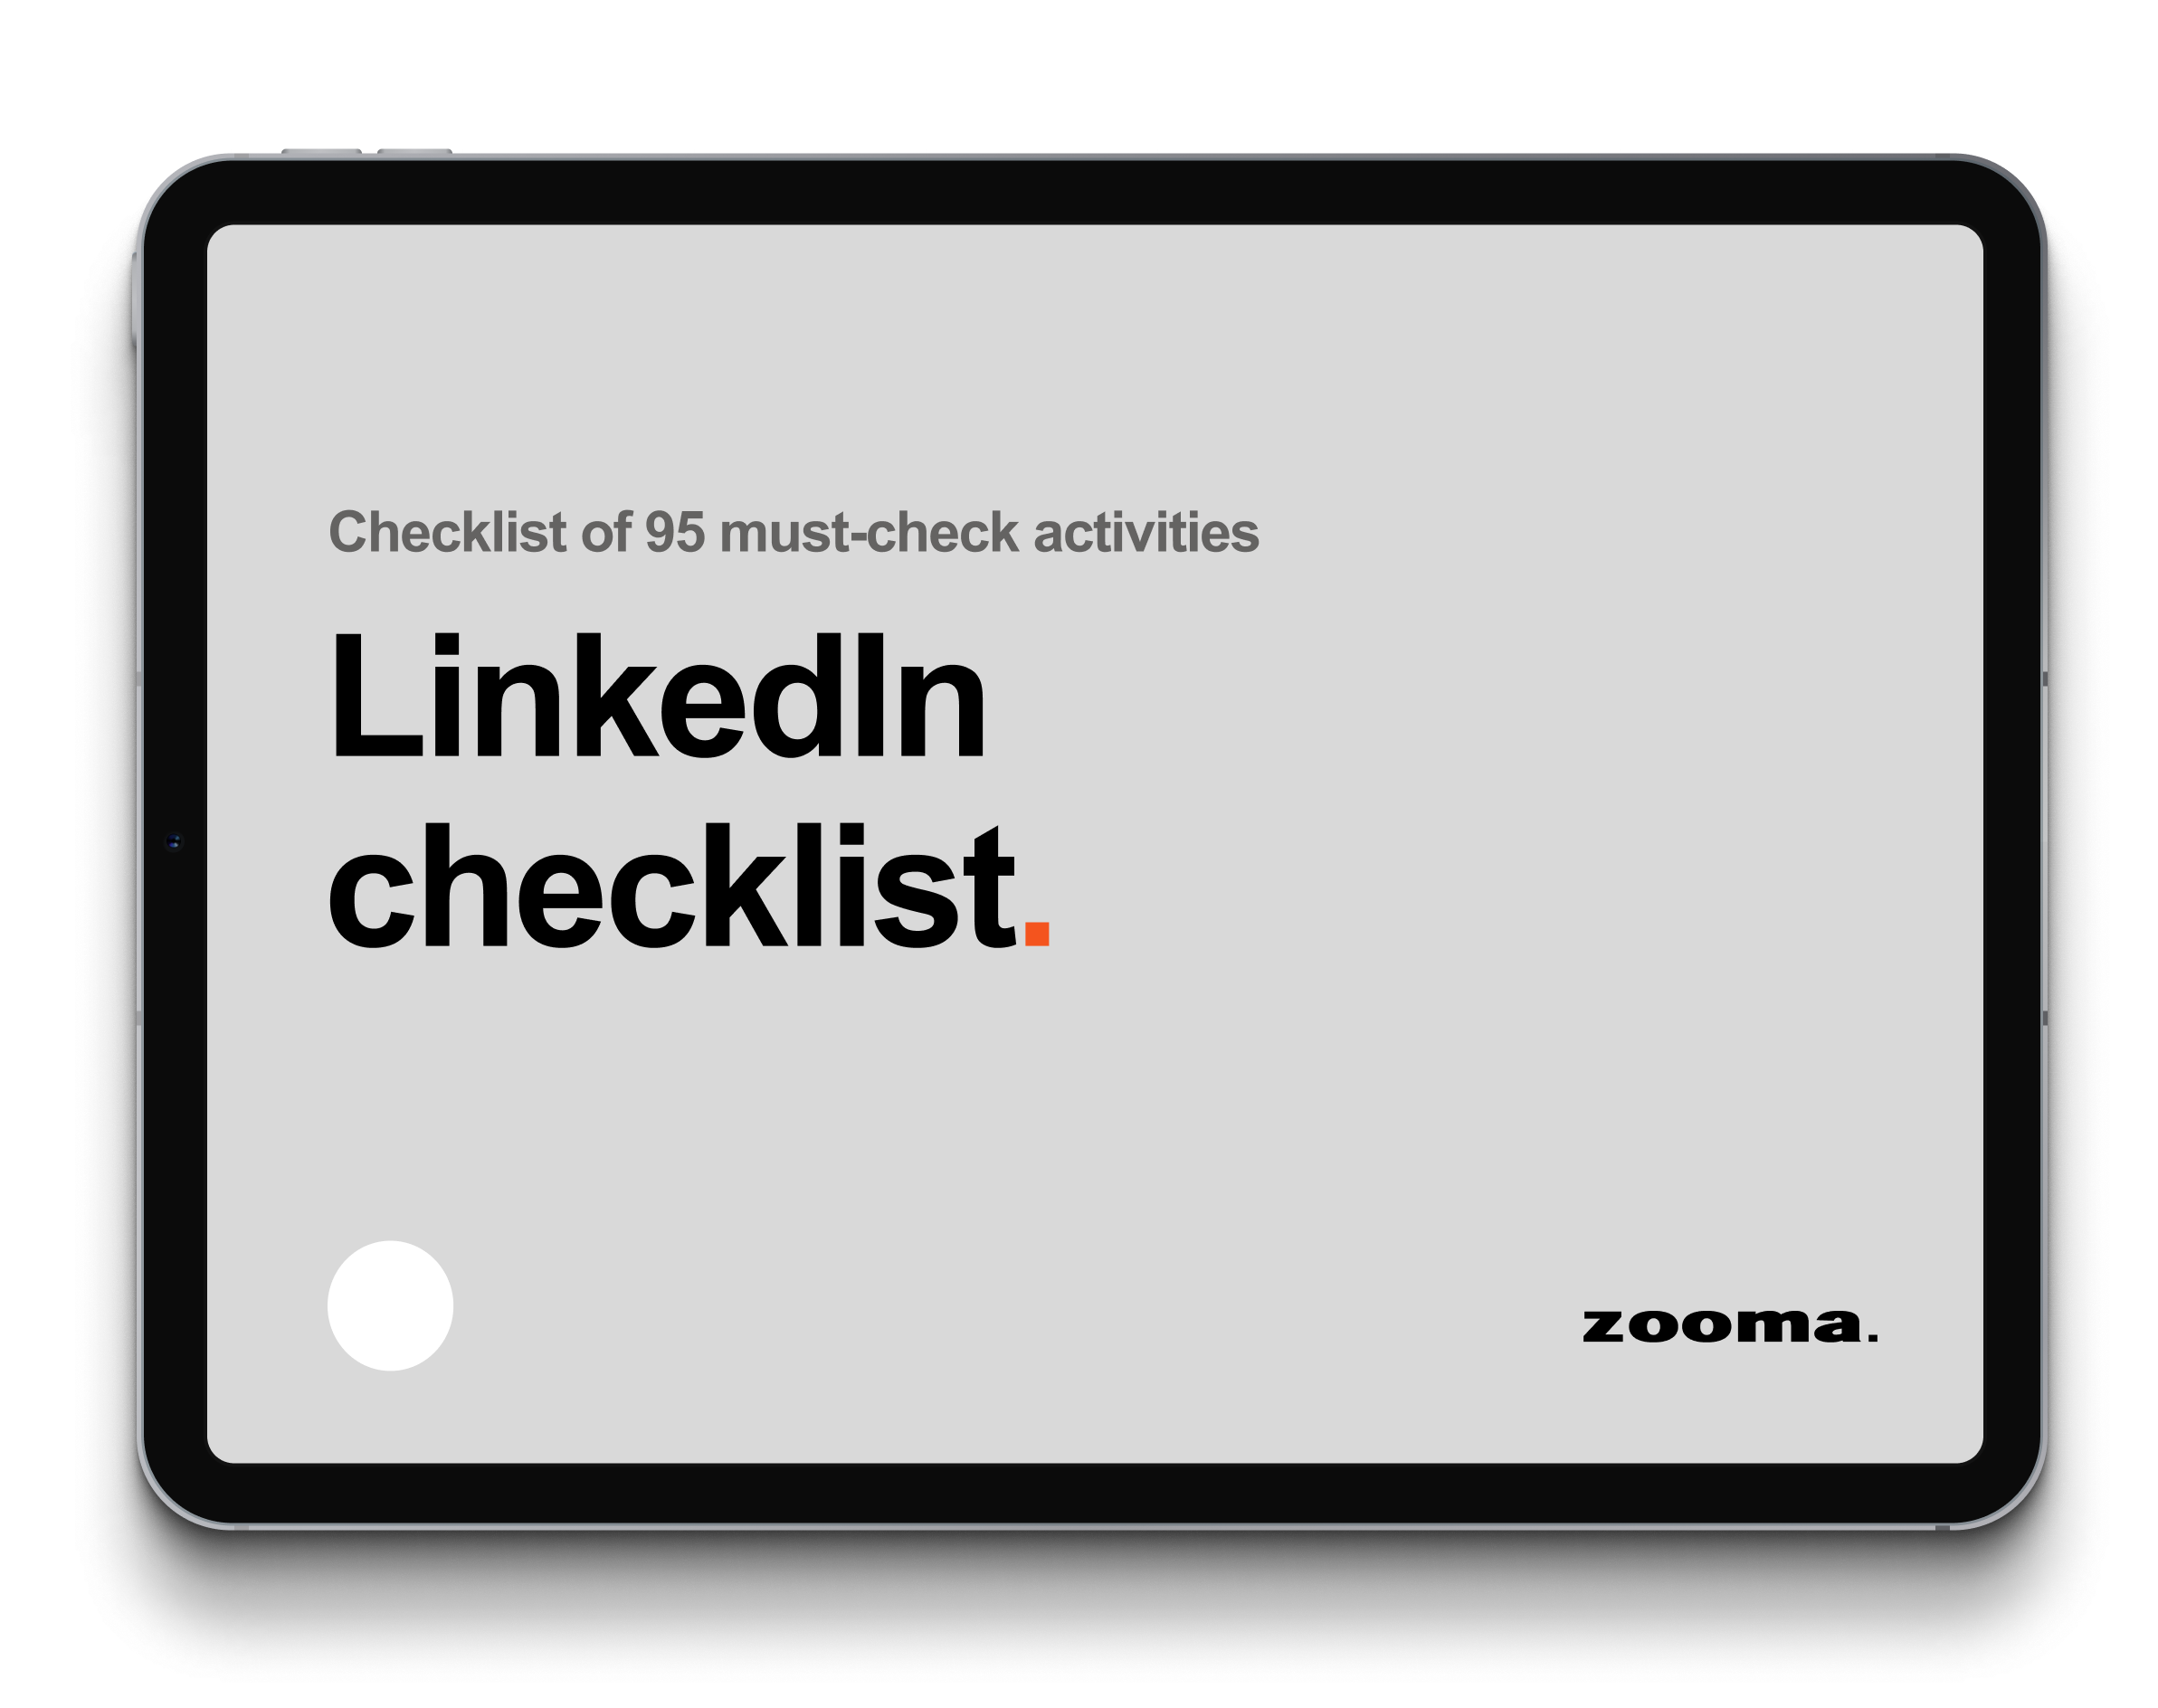 LinkedIn checklist